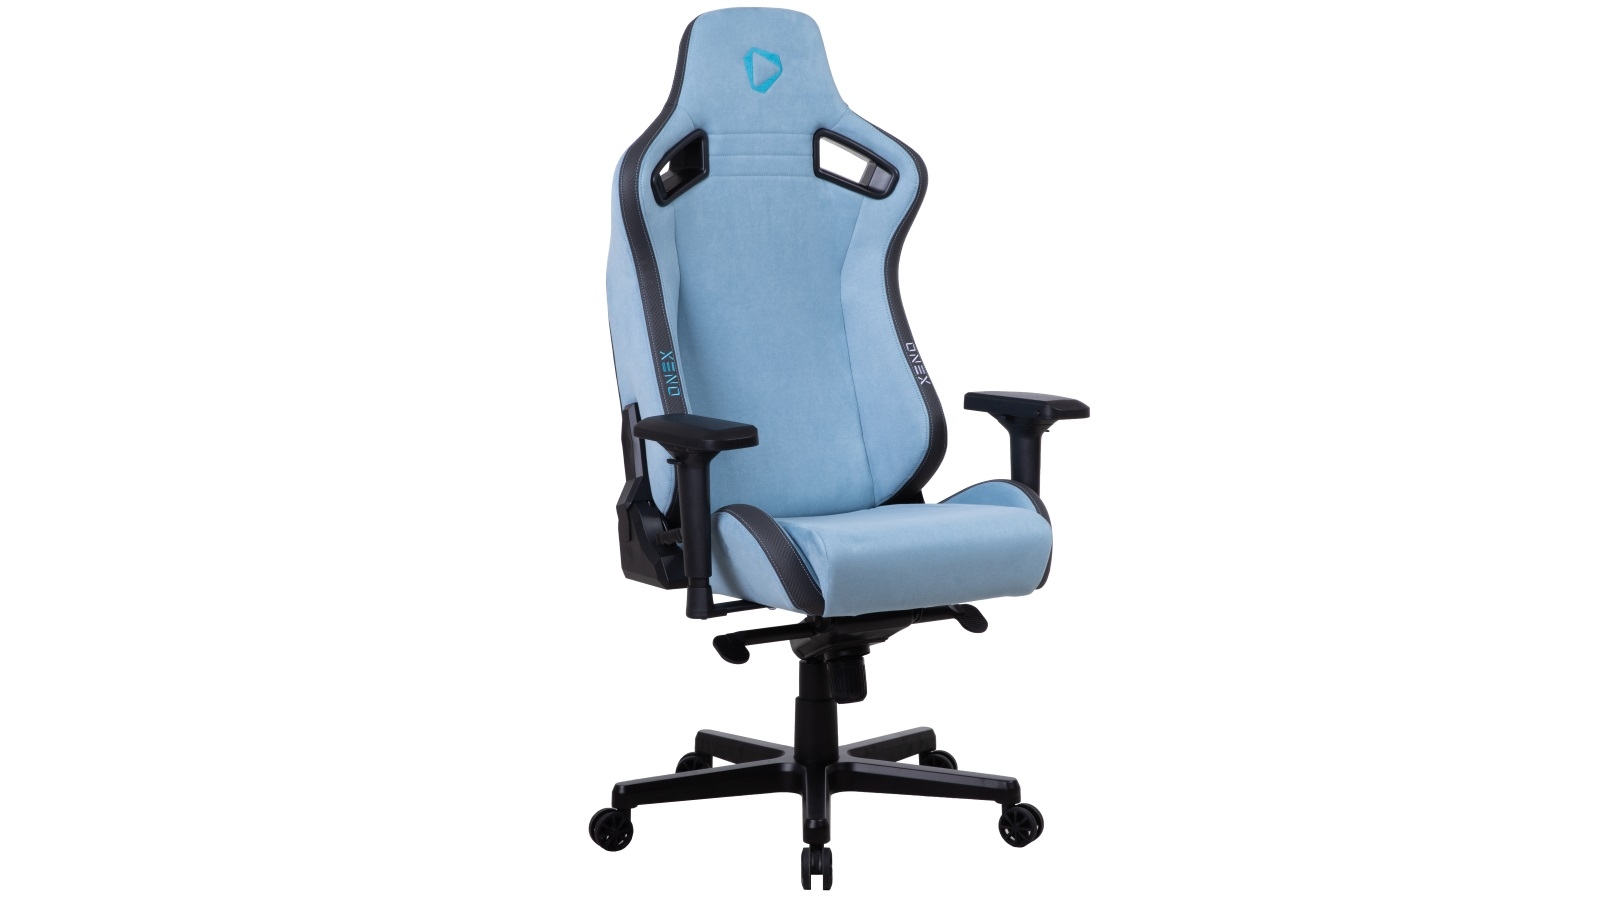 Buy Onex Ev12 Gaming Chair Suede Blue Harvey Norman Au